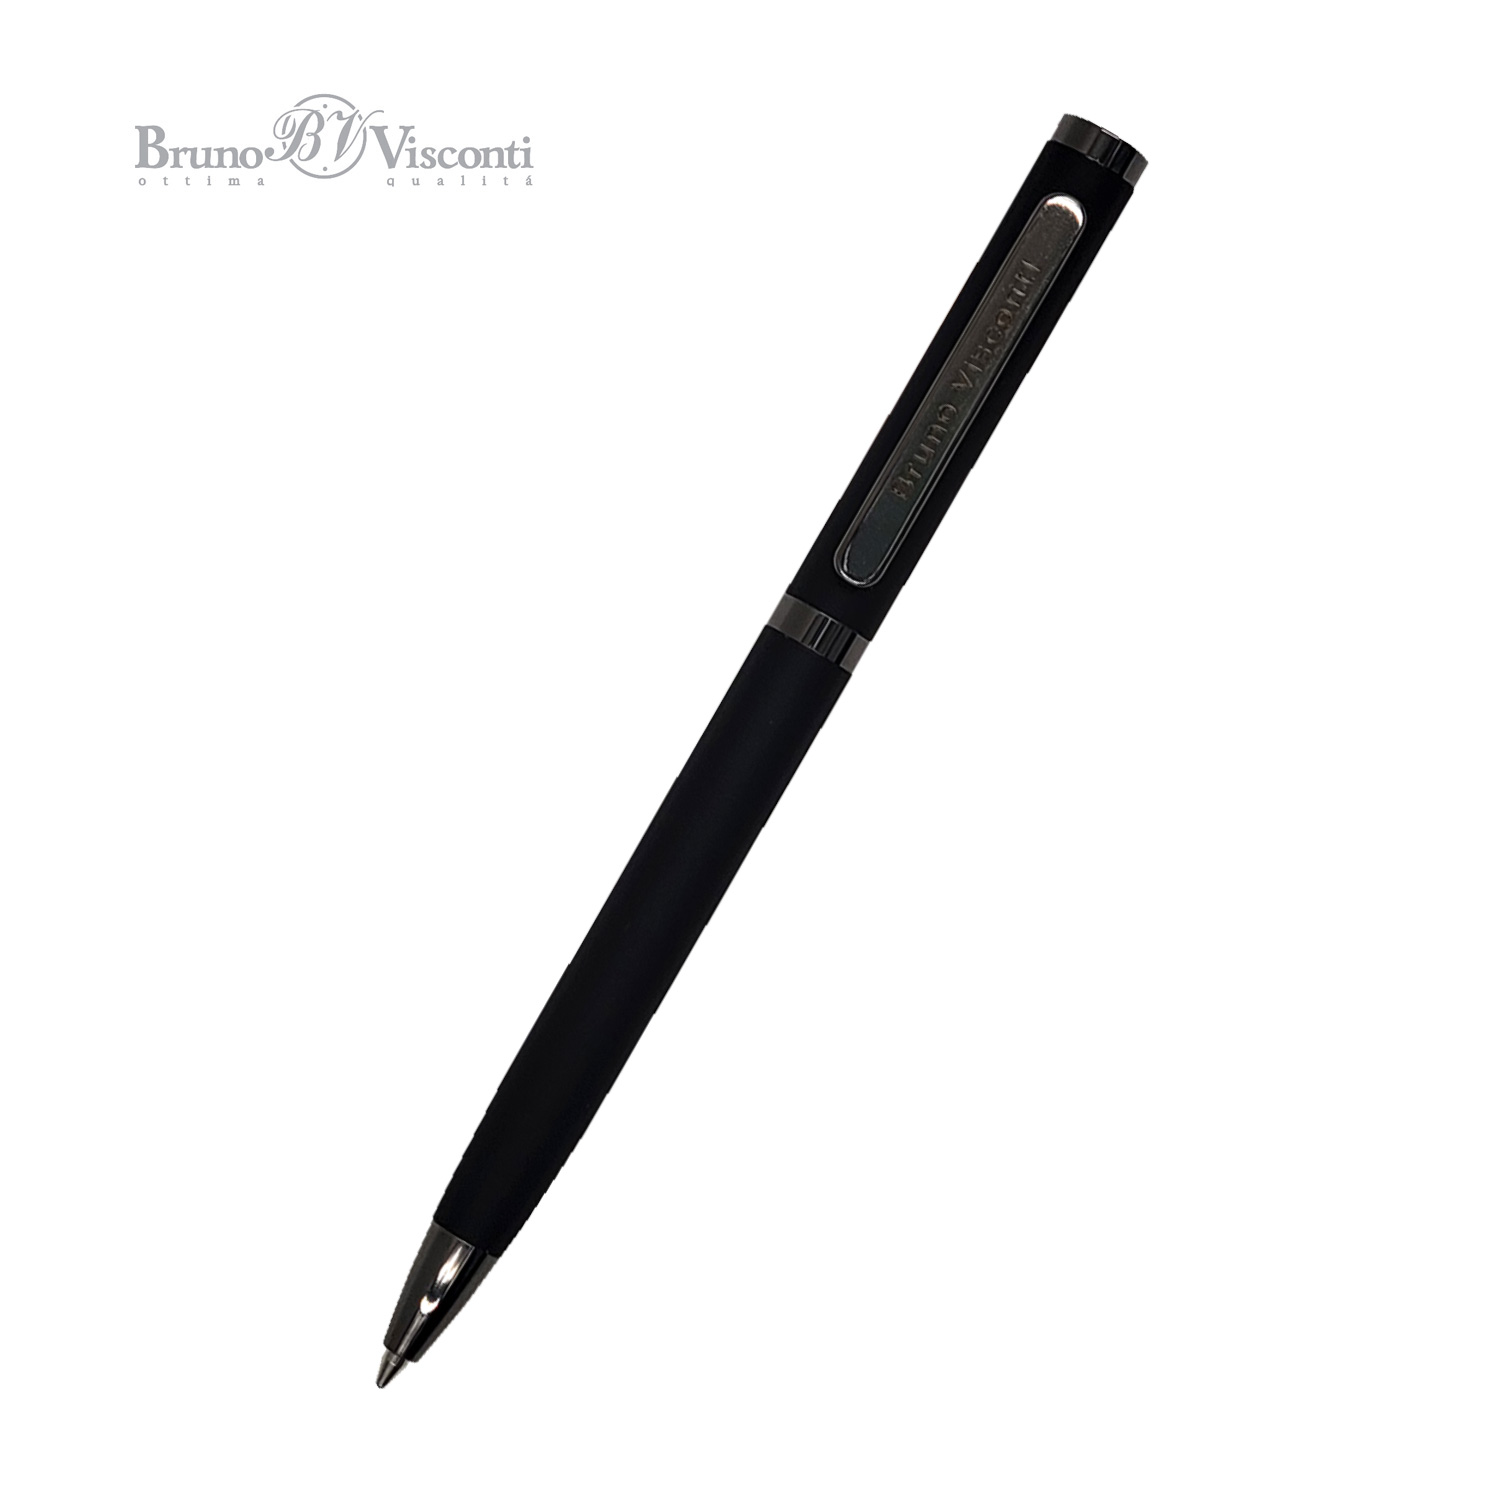 Ручка подар шар BV Firenze синяя 1мм авт черный мет корпус 1мм